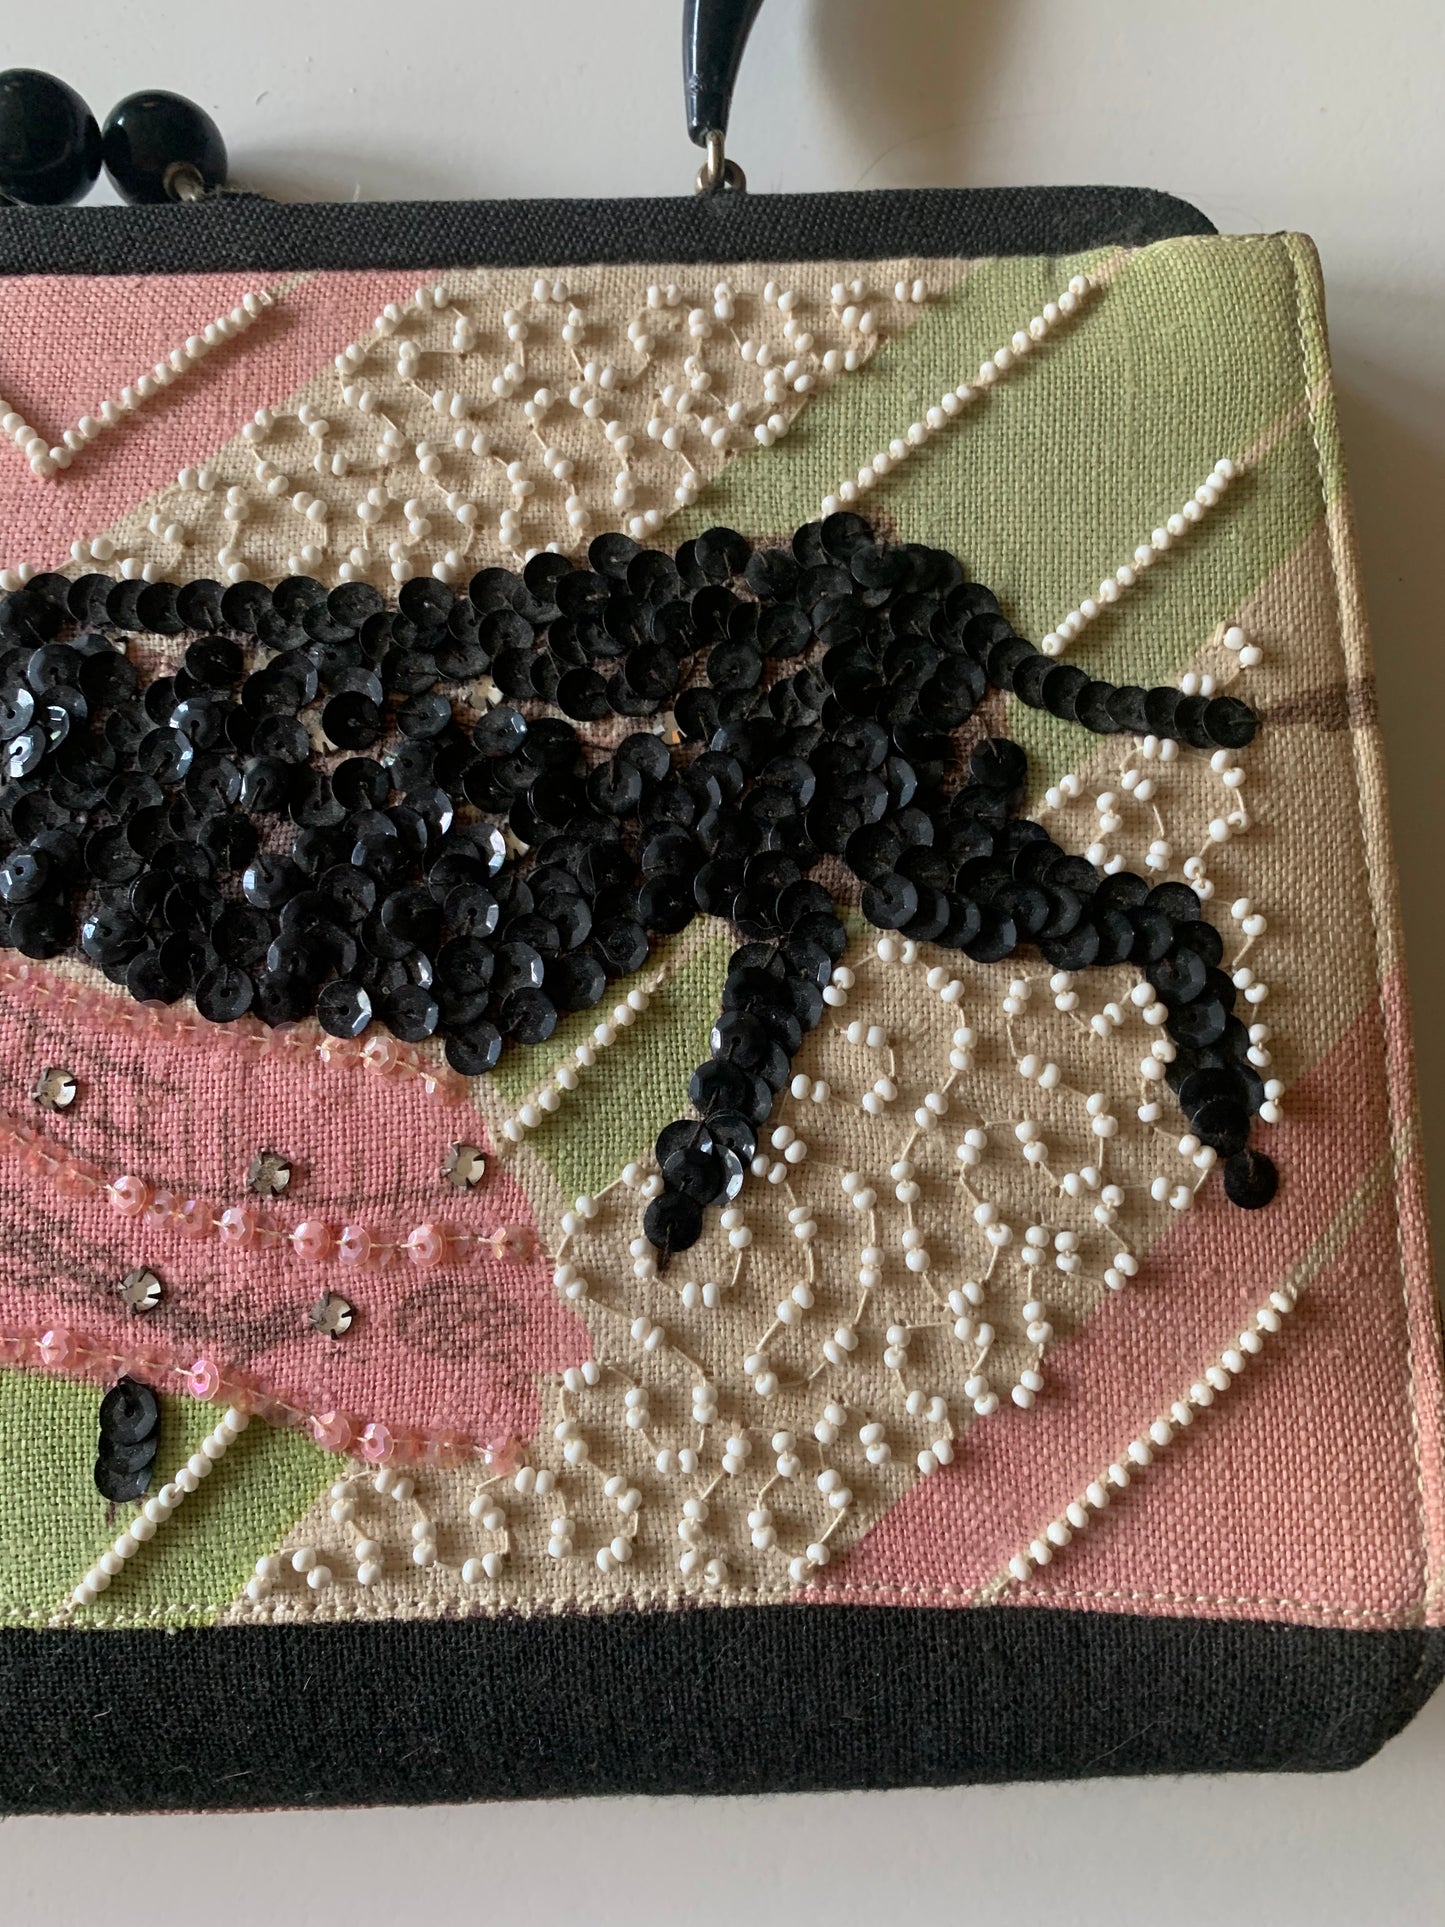 Rare Bullfighter Pink Green and Black Bullfighter "Tea Towel" Handbag circa 1950s